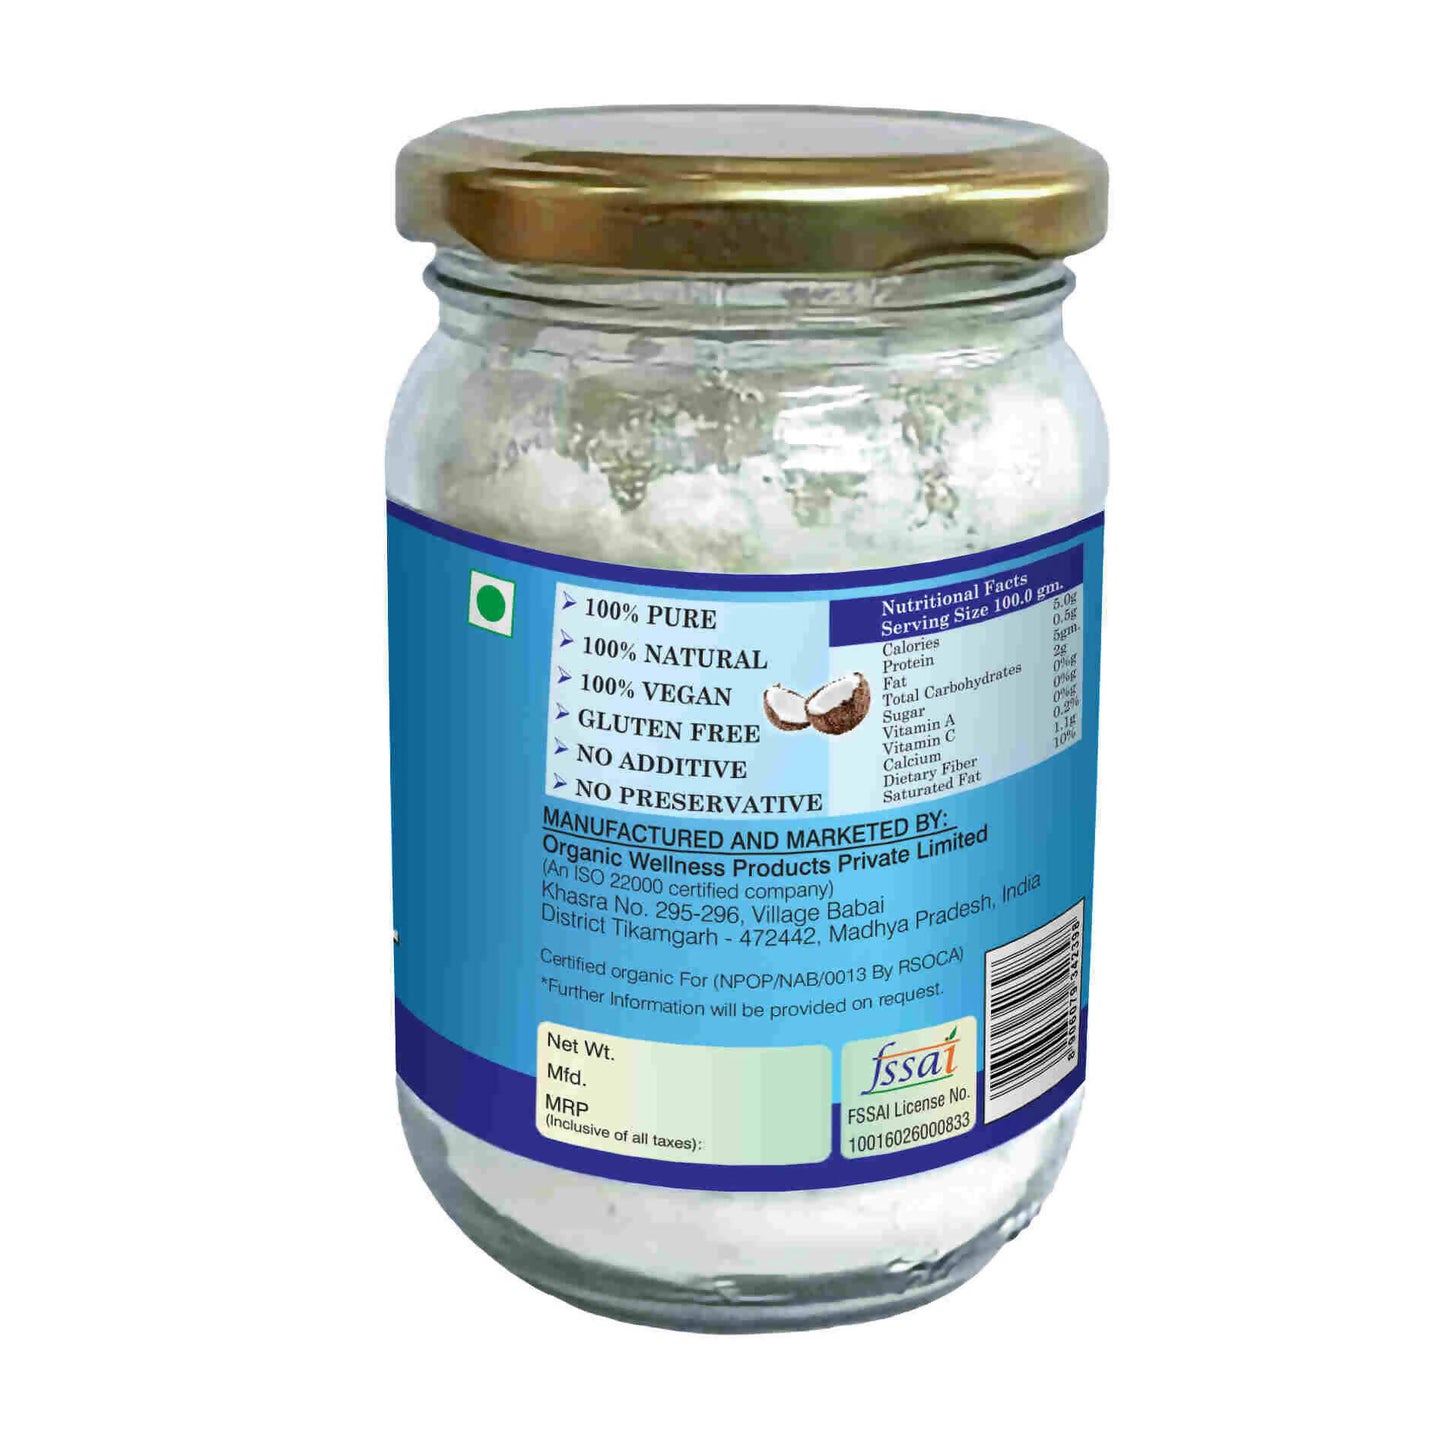 Organic Wellness Coconut Milk Powder